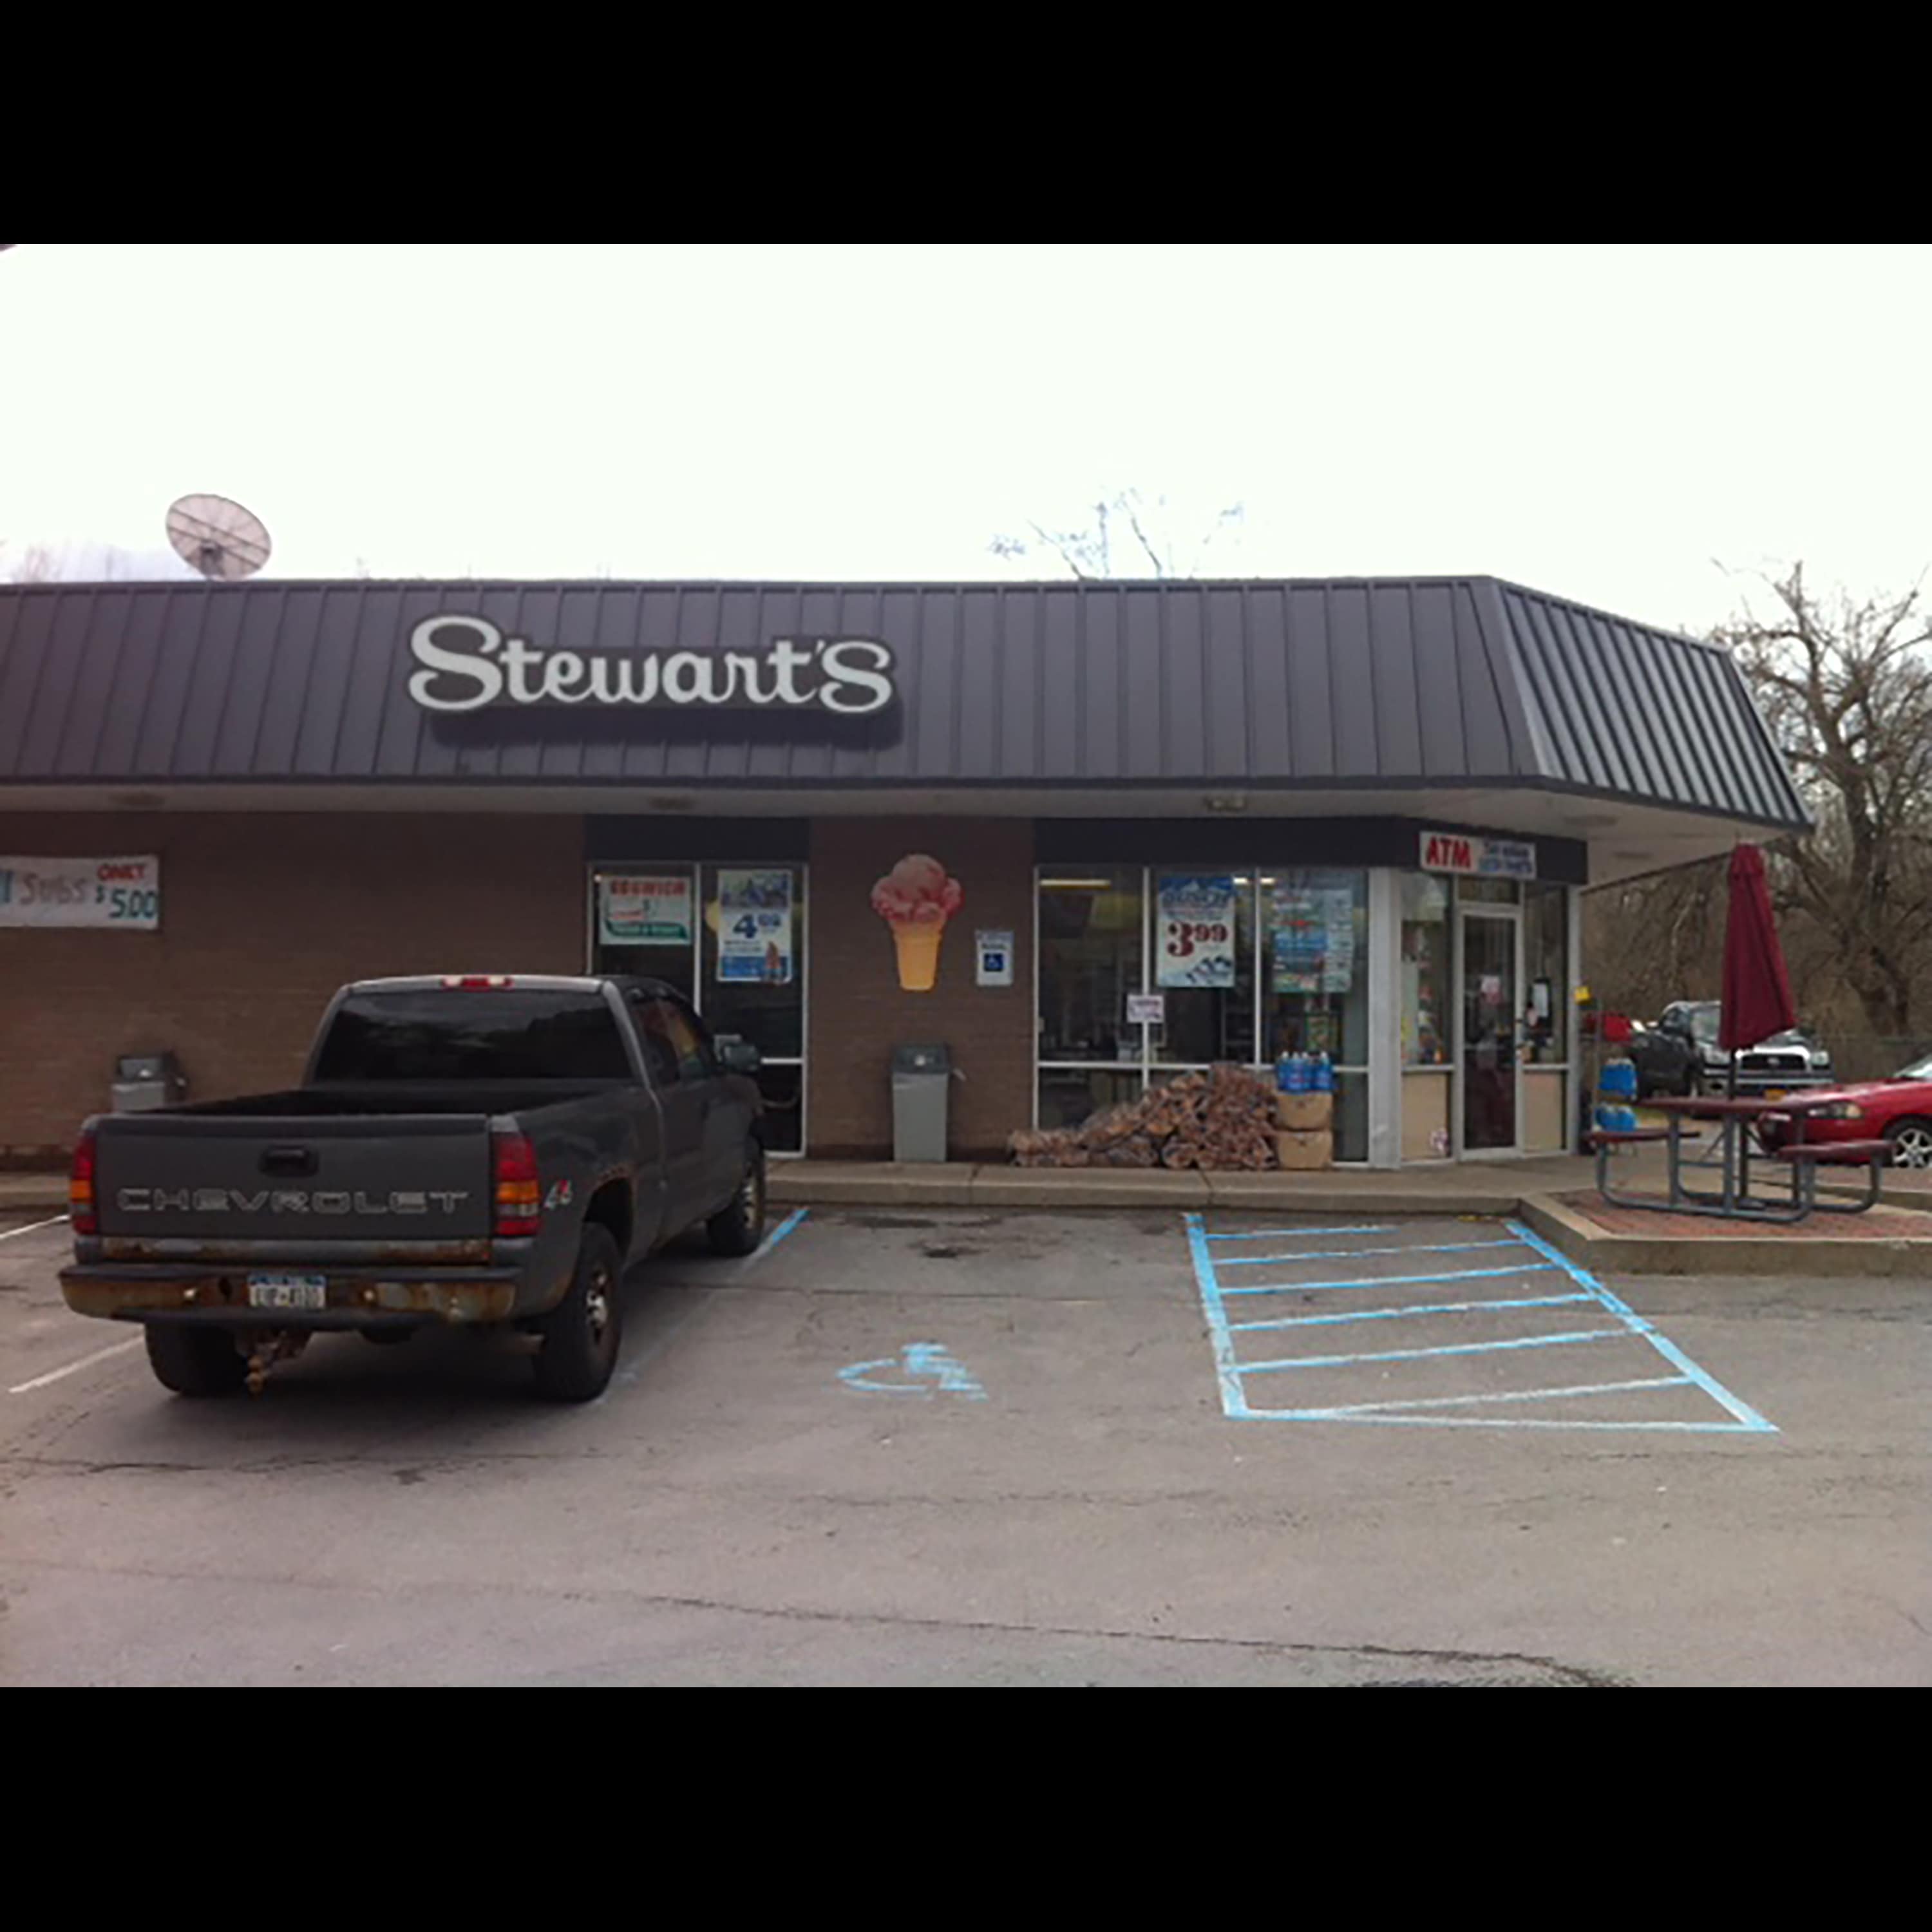 Stewart’s Shops - Chazy (NY 12921), US, cheap gas near me now